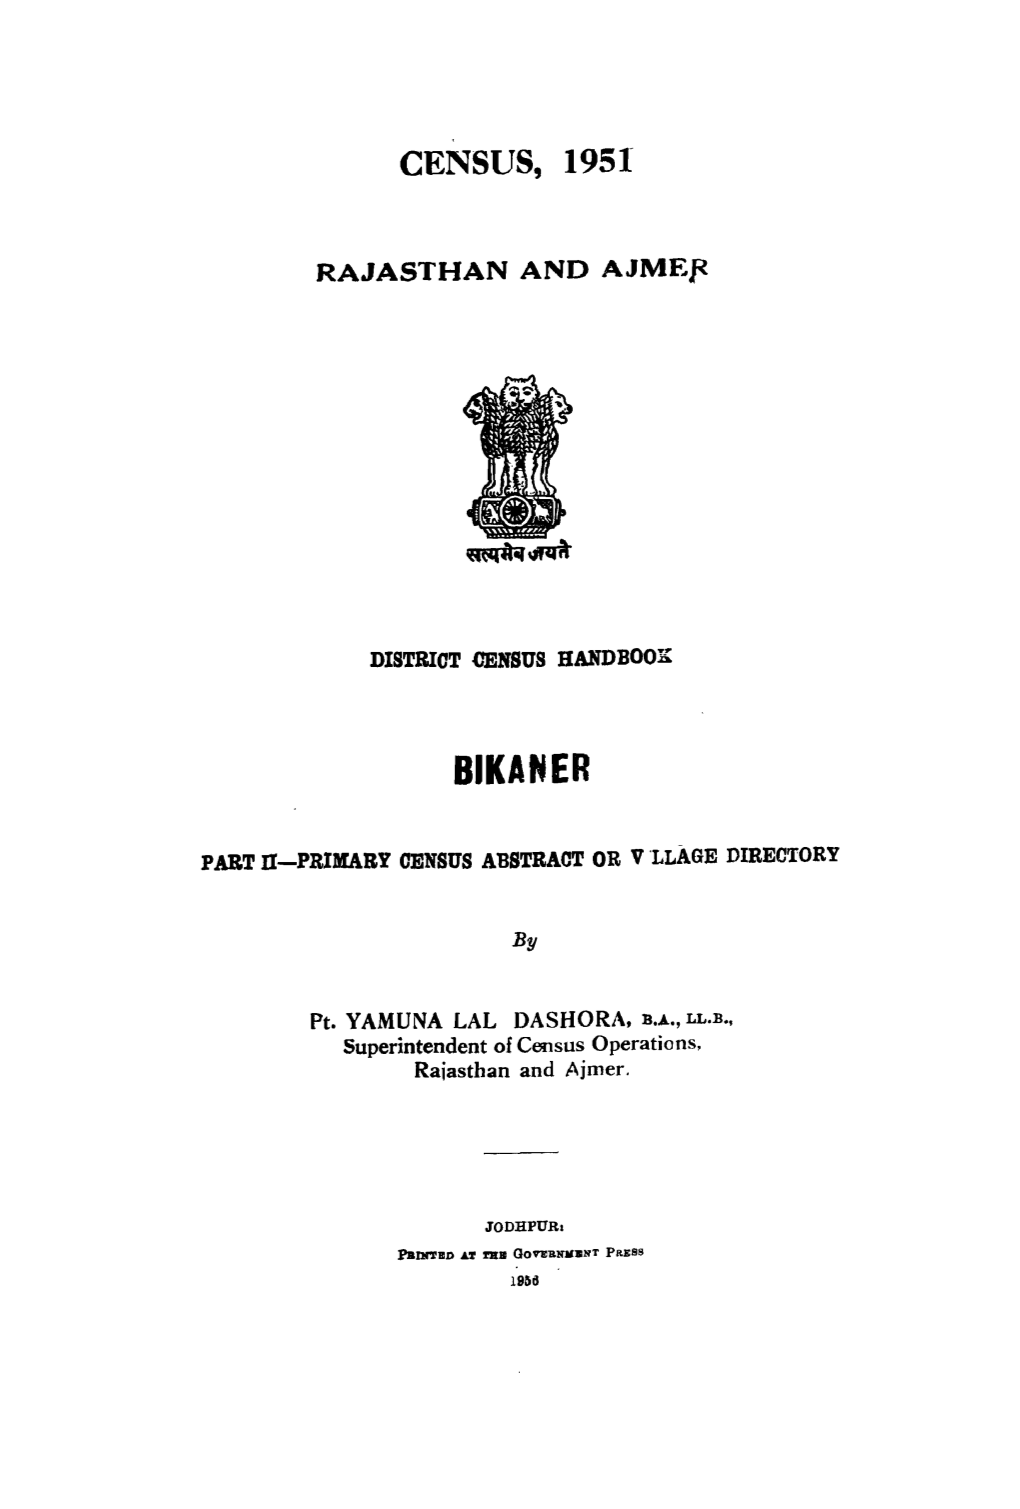 District Census Handbook Bikaner, Rajasthan and Ajmer